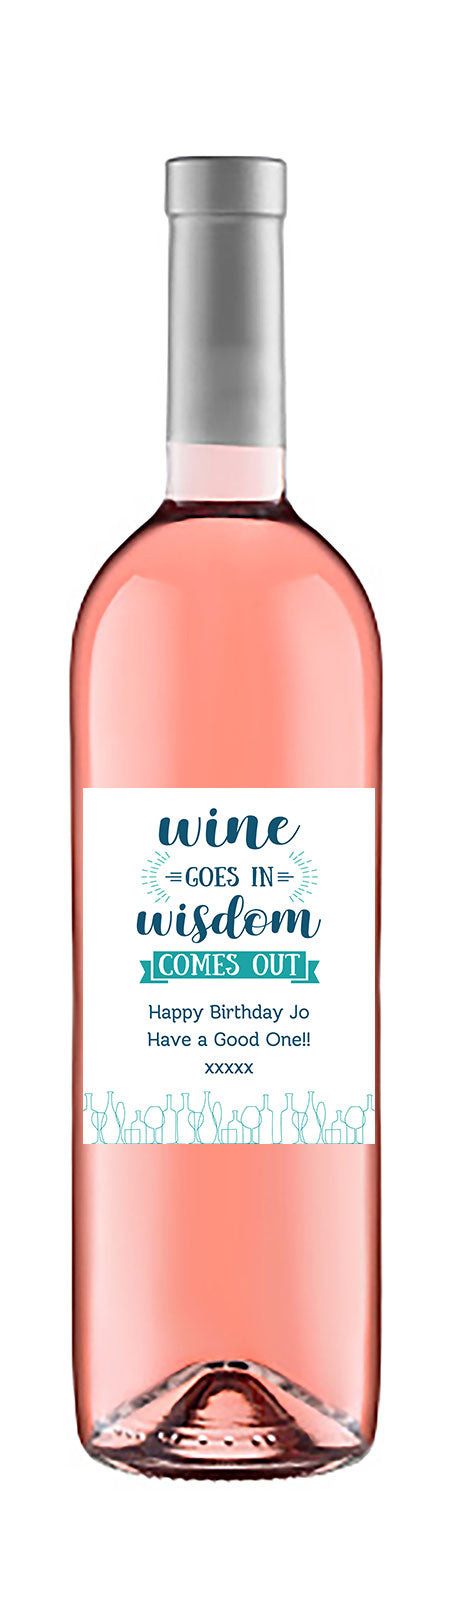 Personalised Wine Bottle Label - Wine Wisdom Design